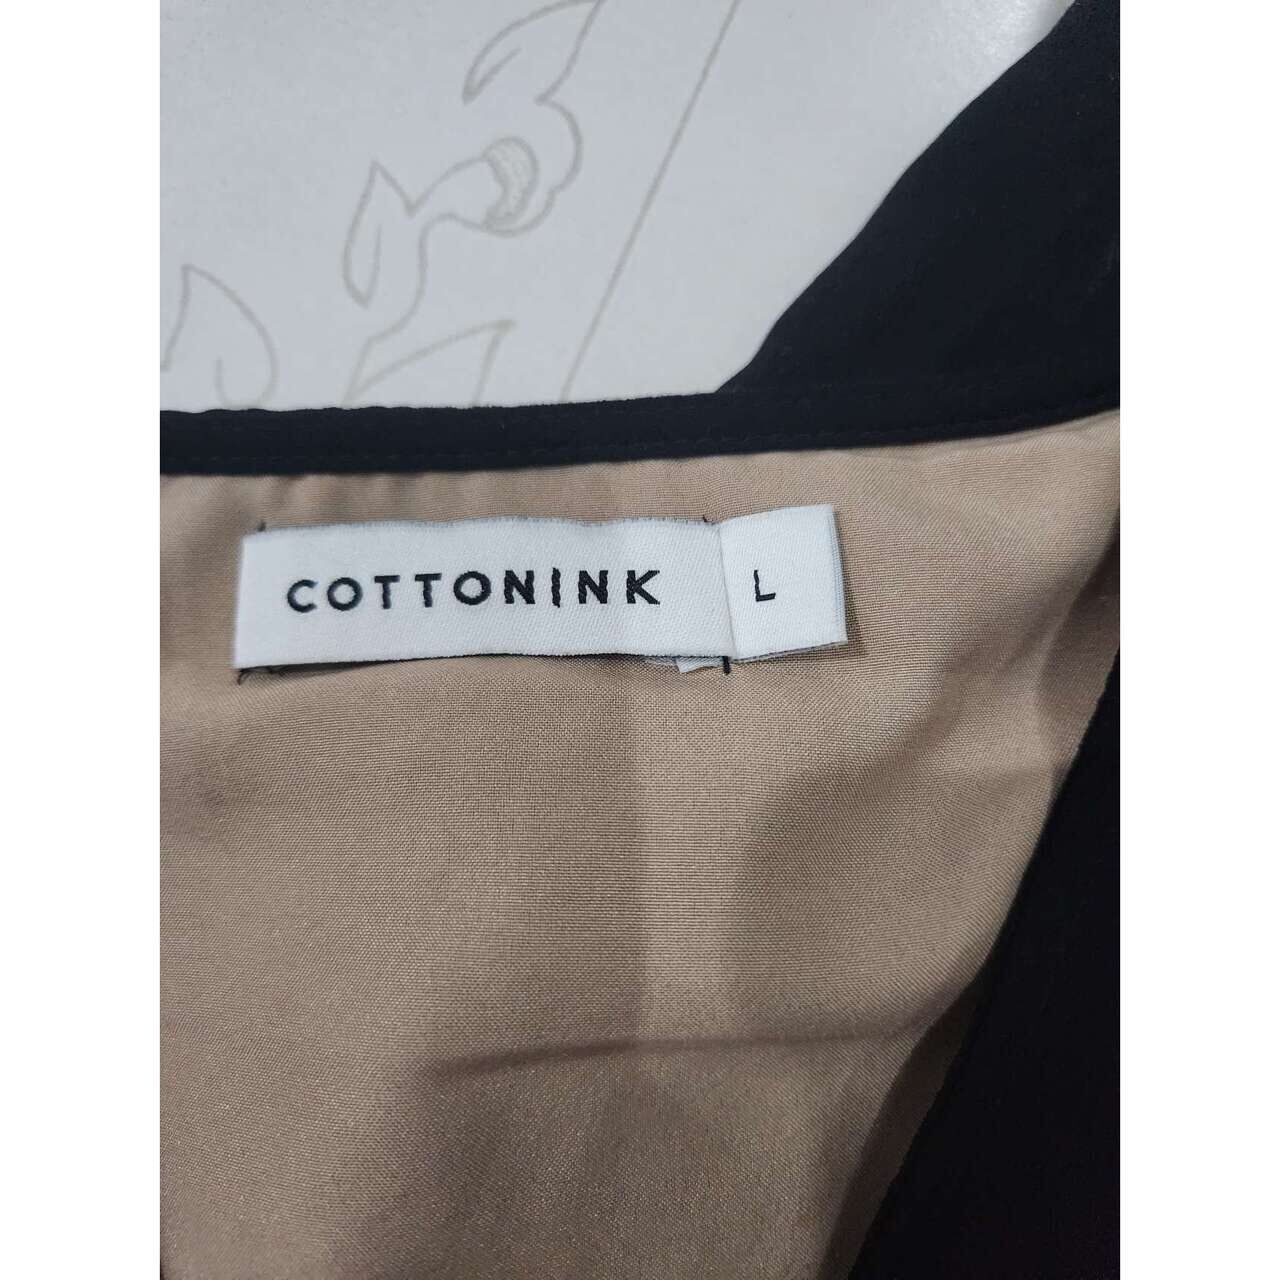 Cotton Ink Black Mini Dress